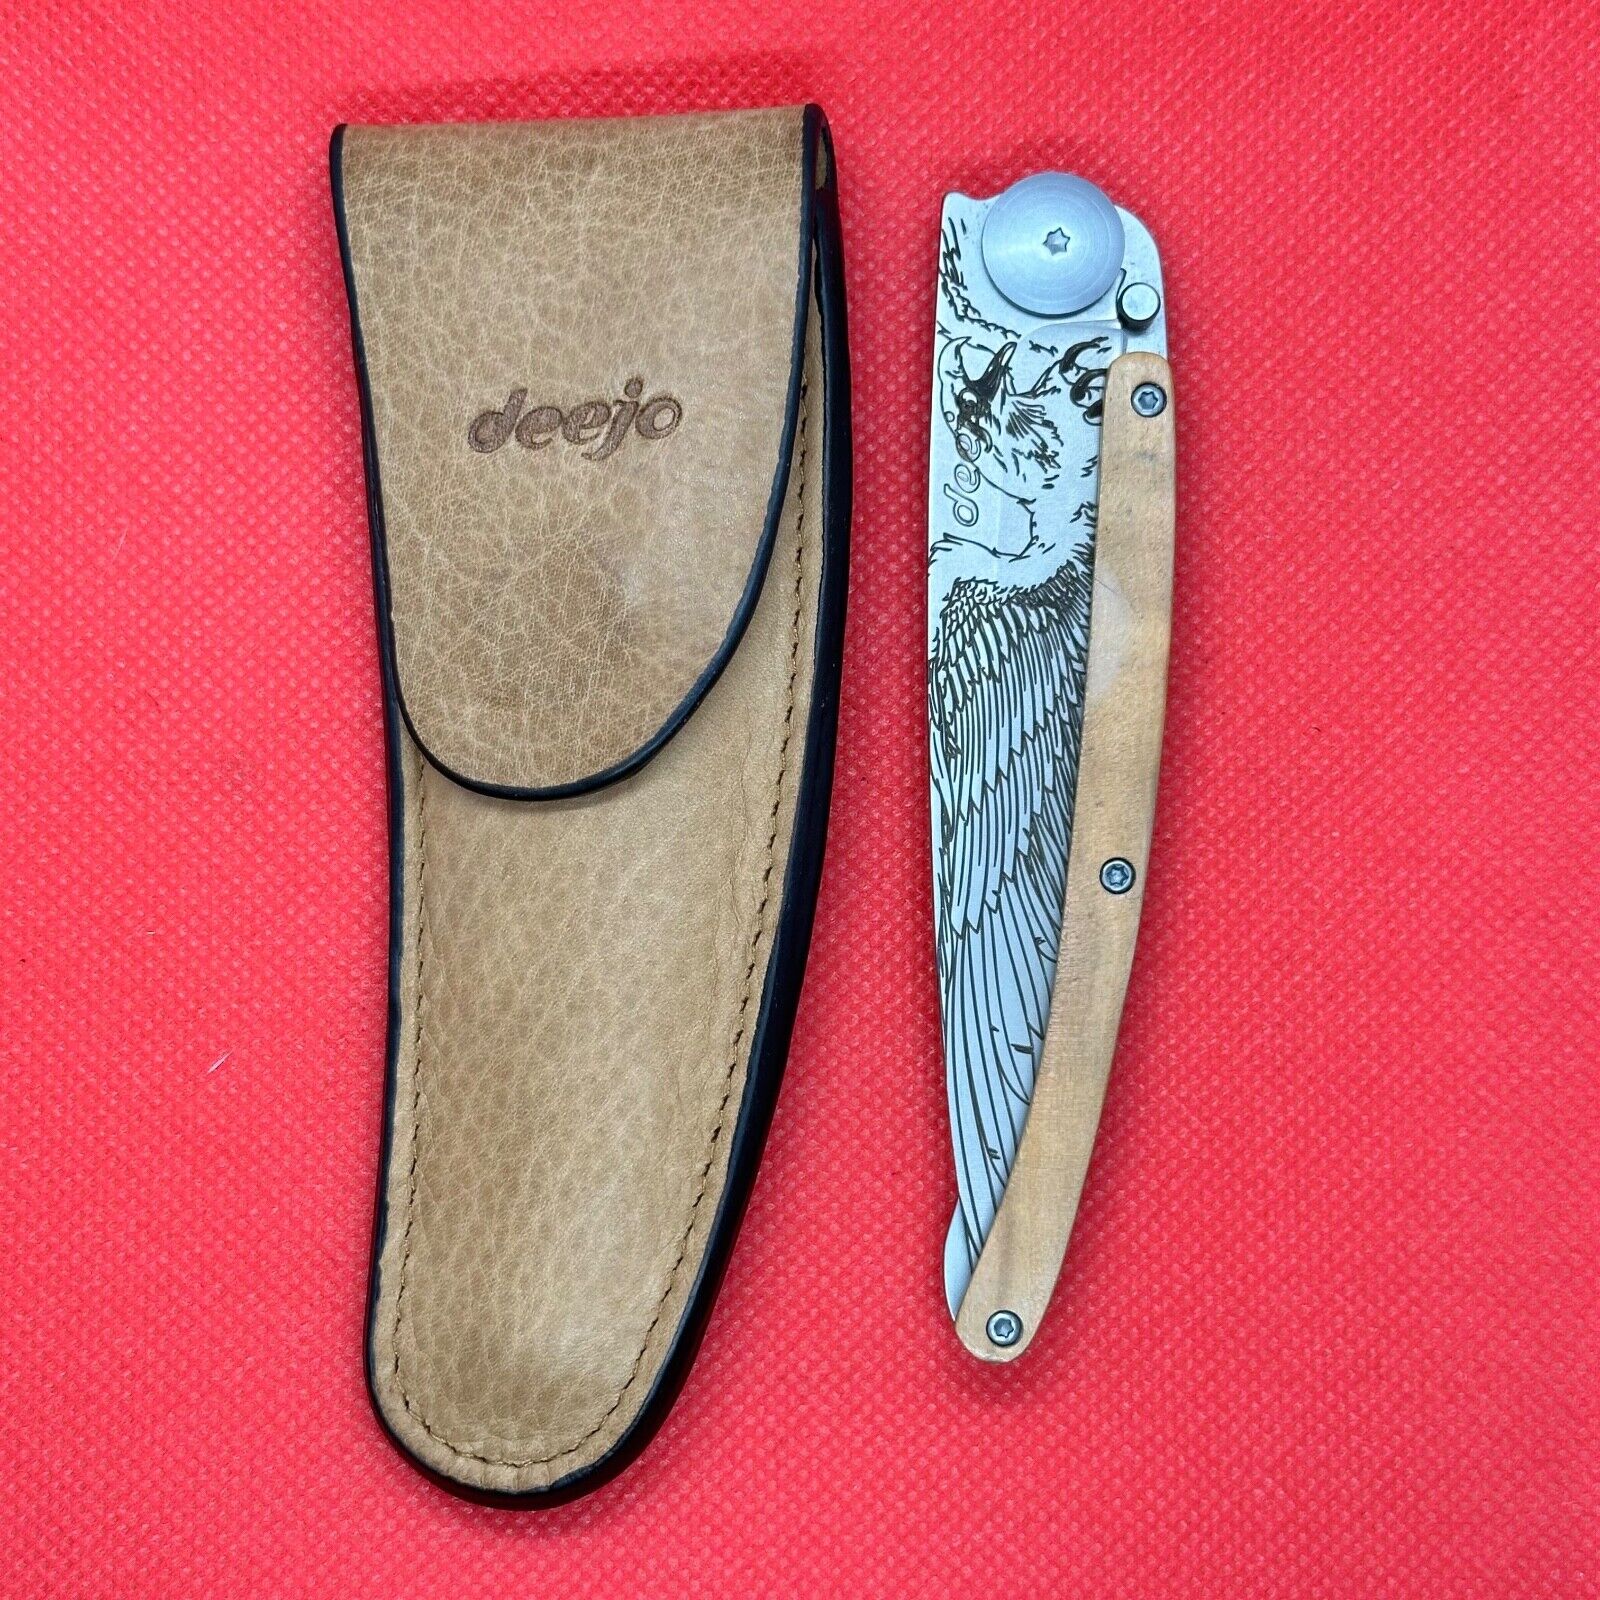 Deejo 37g (9cm) Wood handle and Eagle Design Pocket Knife with sheath, great EDC